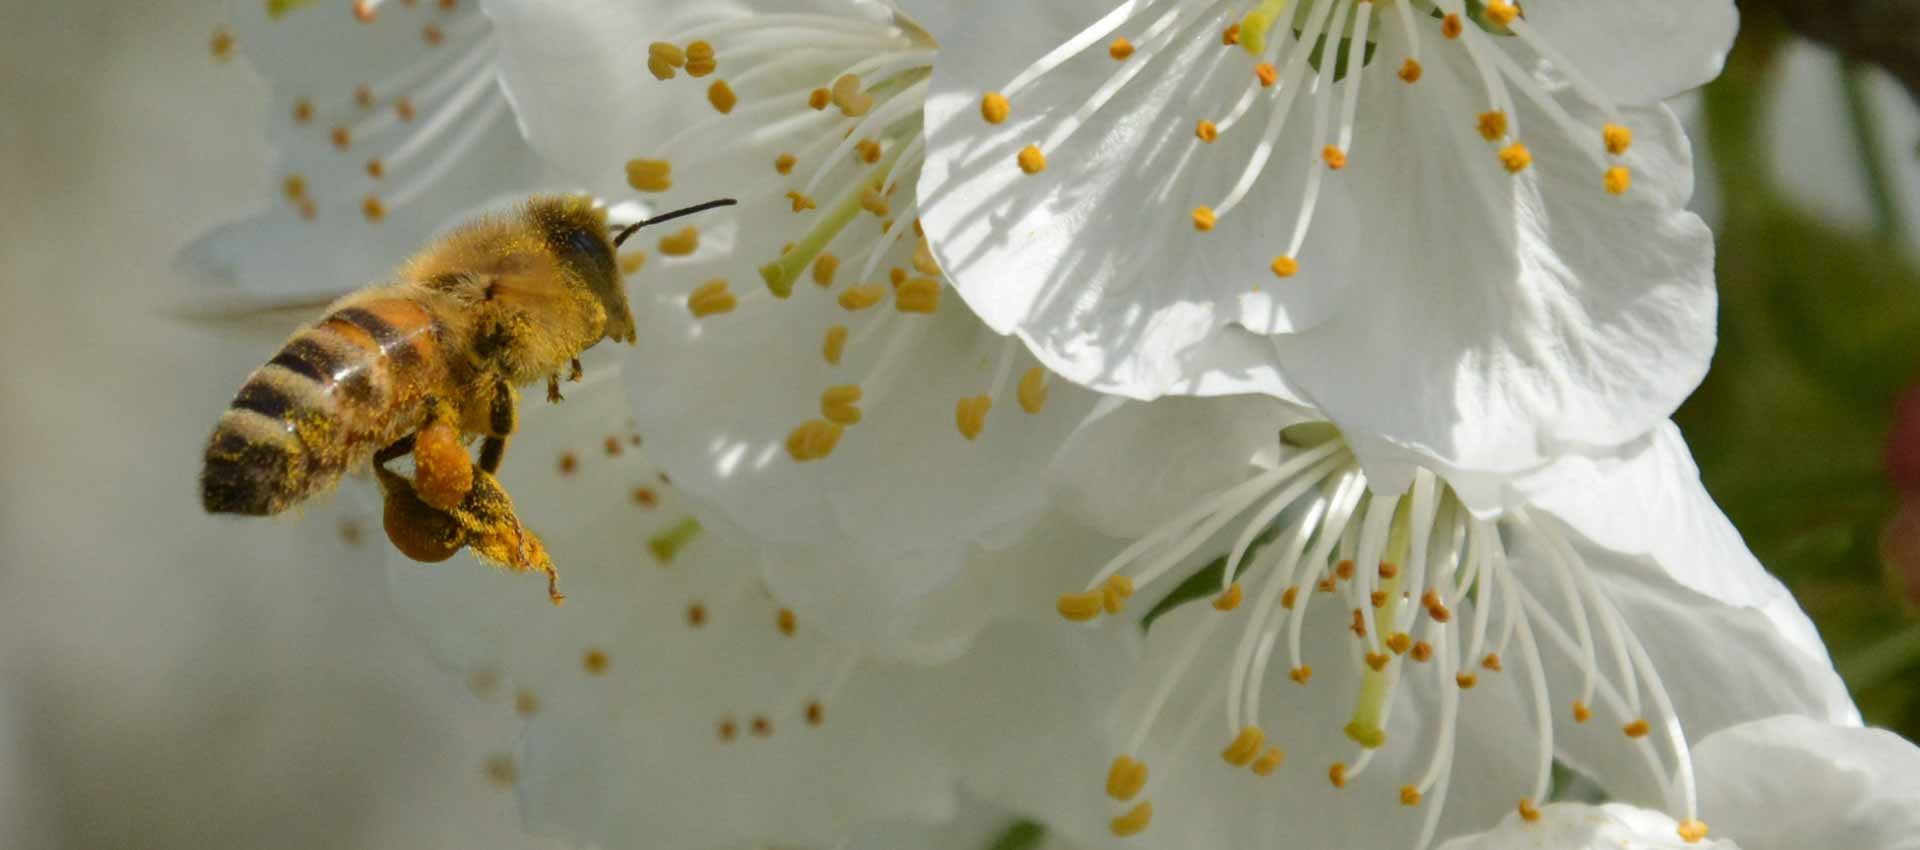 Immagine di un'ape